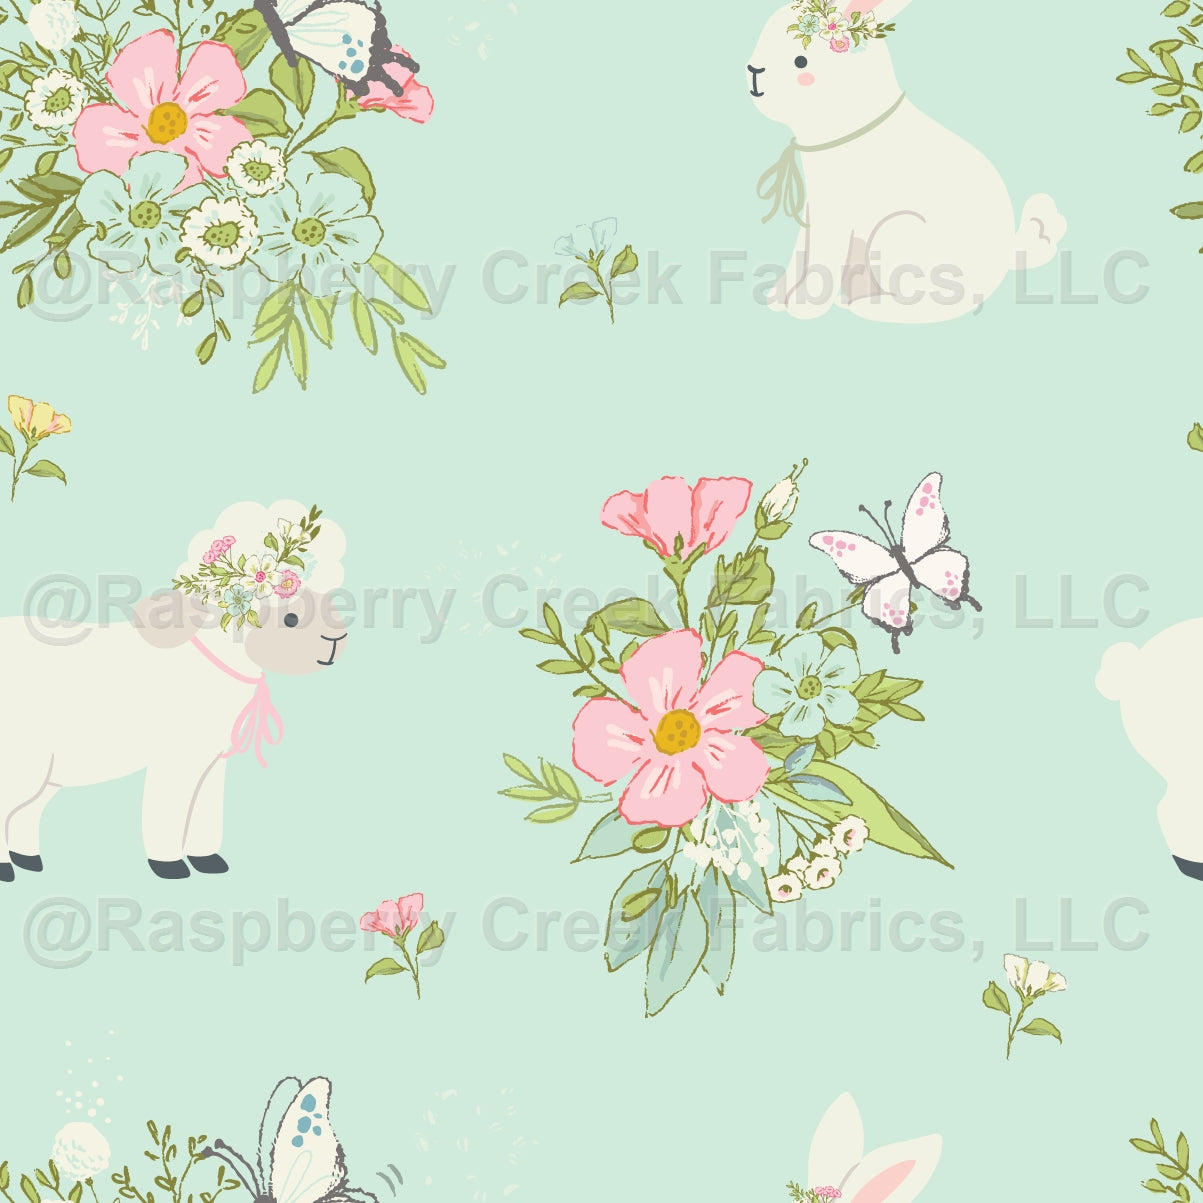 Floral Lamb and Bunny - MINT Fabric, Raspberry Creek Fabrics, watermarked